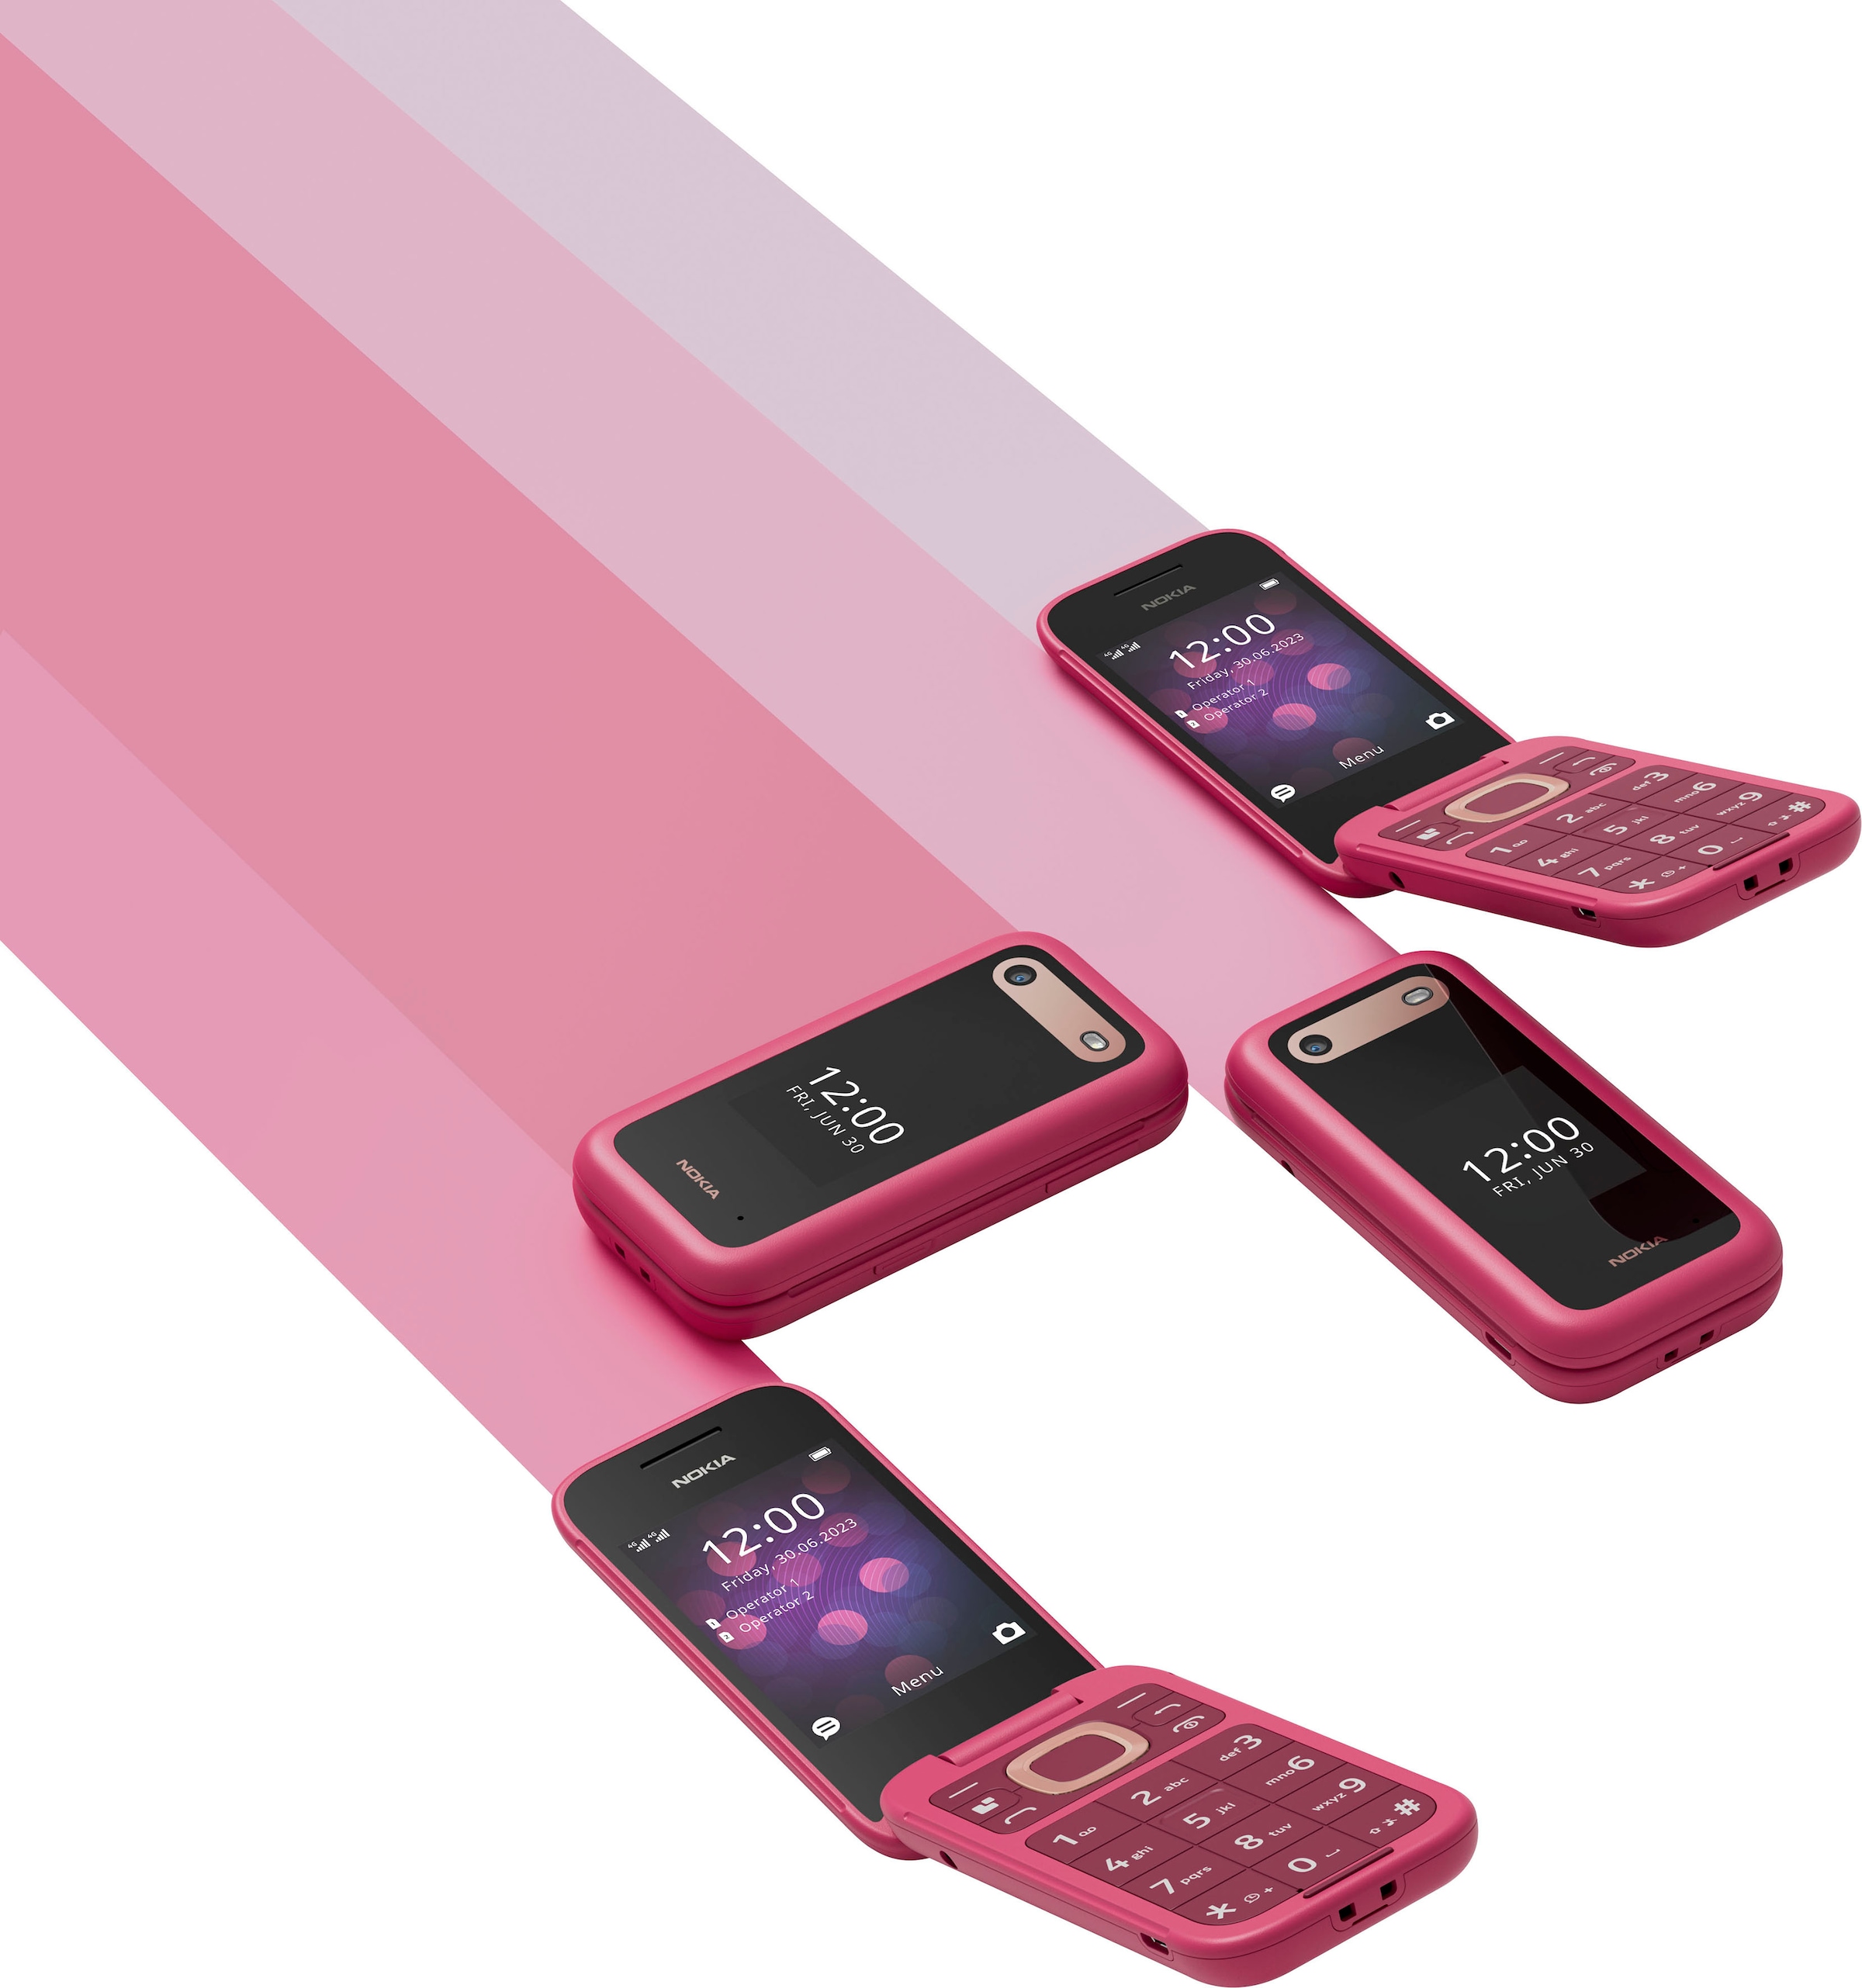 Nokia Klapphandy »2660 Flip«, rosa, 7,11 cm/2,8 Zoll, 0,13 GB Speicherplatz, 0,3 MP Kamera